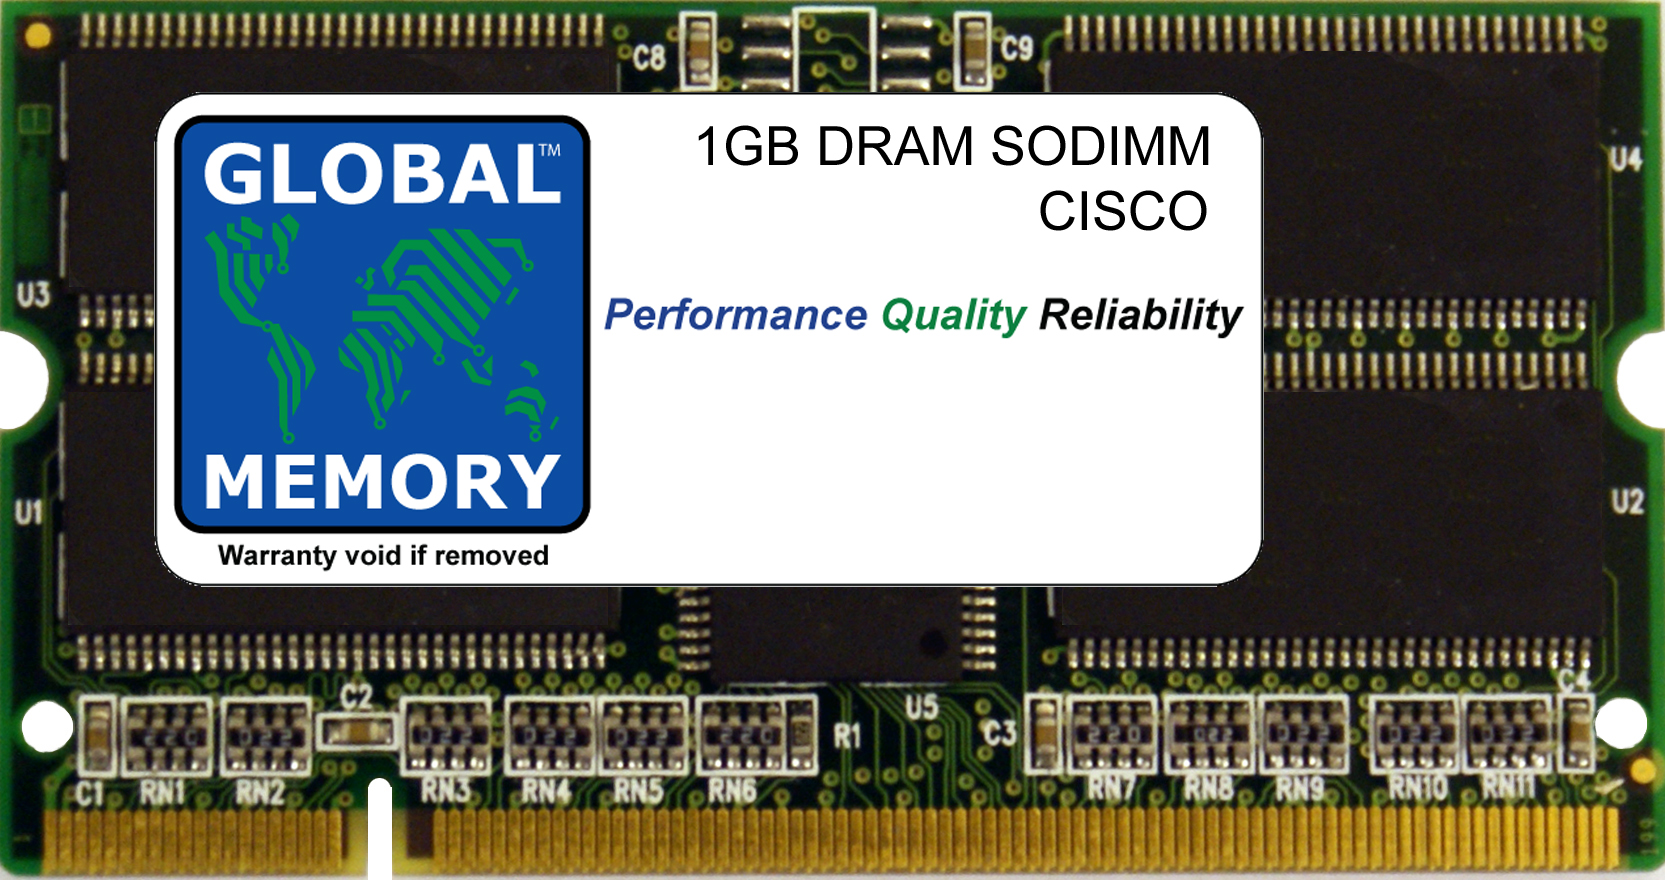 1GB DRAM SODIMM MEMORY RAM FOR CISCO 7600 SERIES ROUTERS SUPERVISOR ENGINE & ROUTE SWITCH PROCESSOR (MEM-SIP-200-1G)